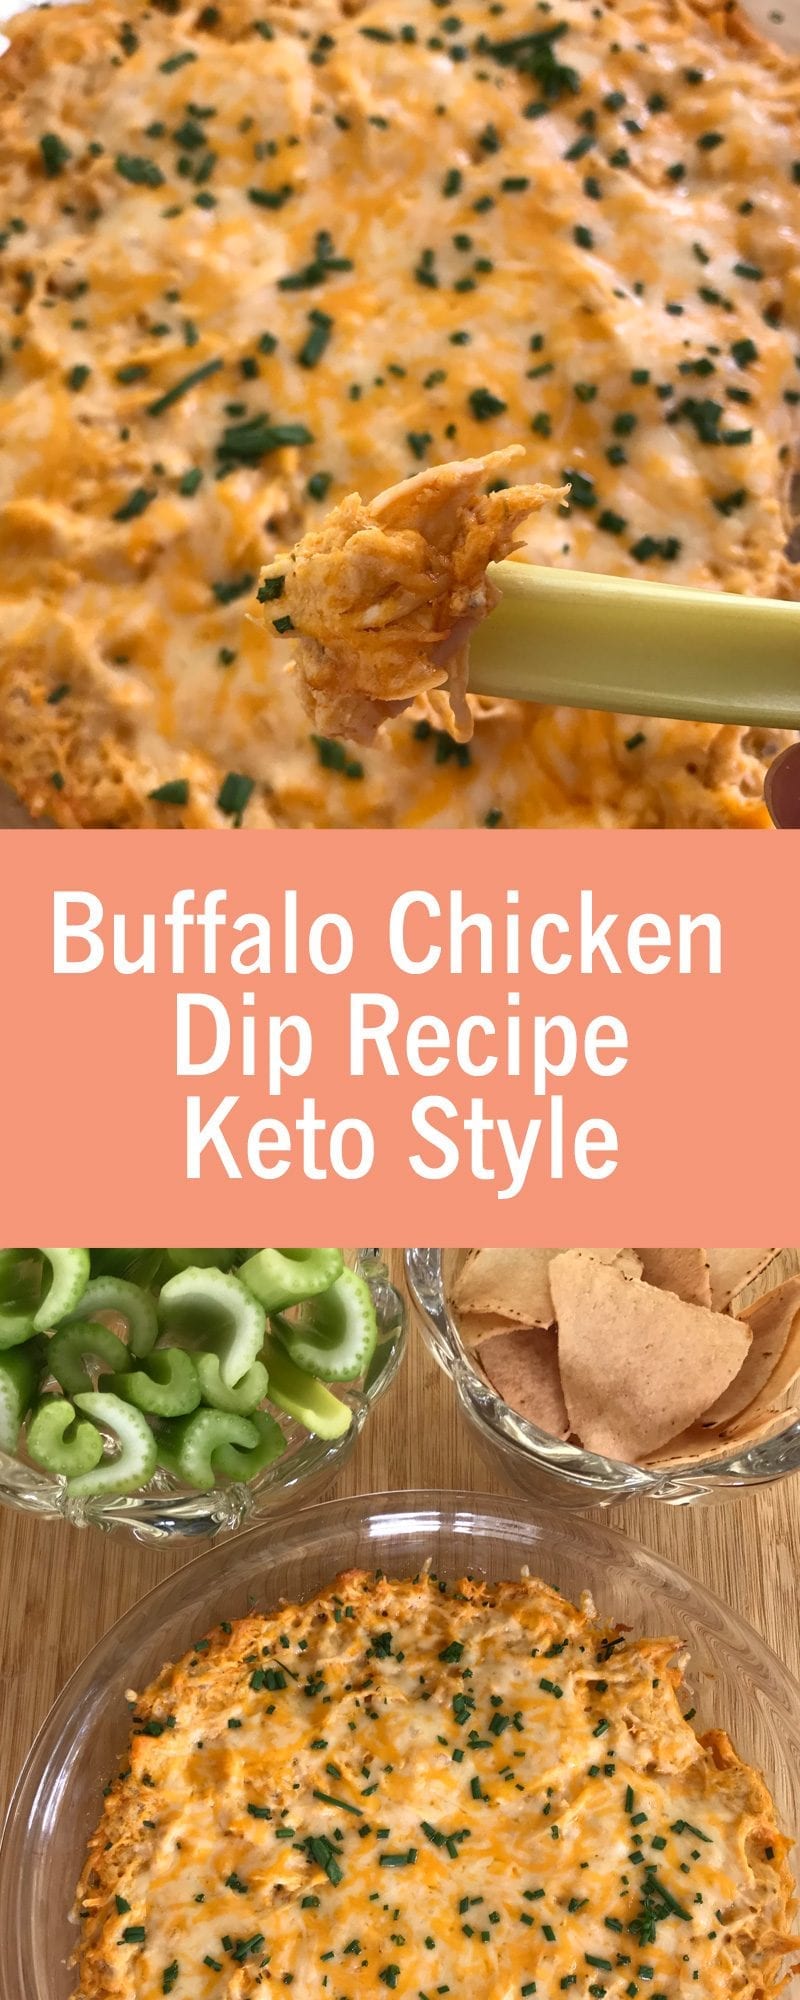 Buffalo Chicken Dip Recipe Keto Style